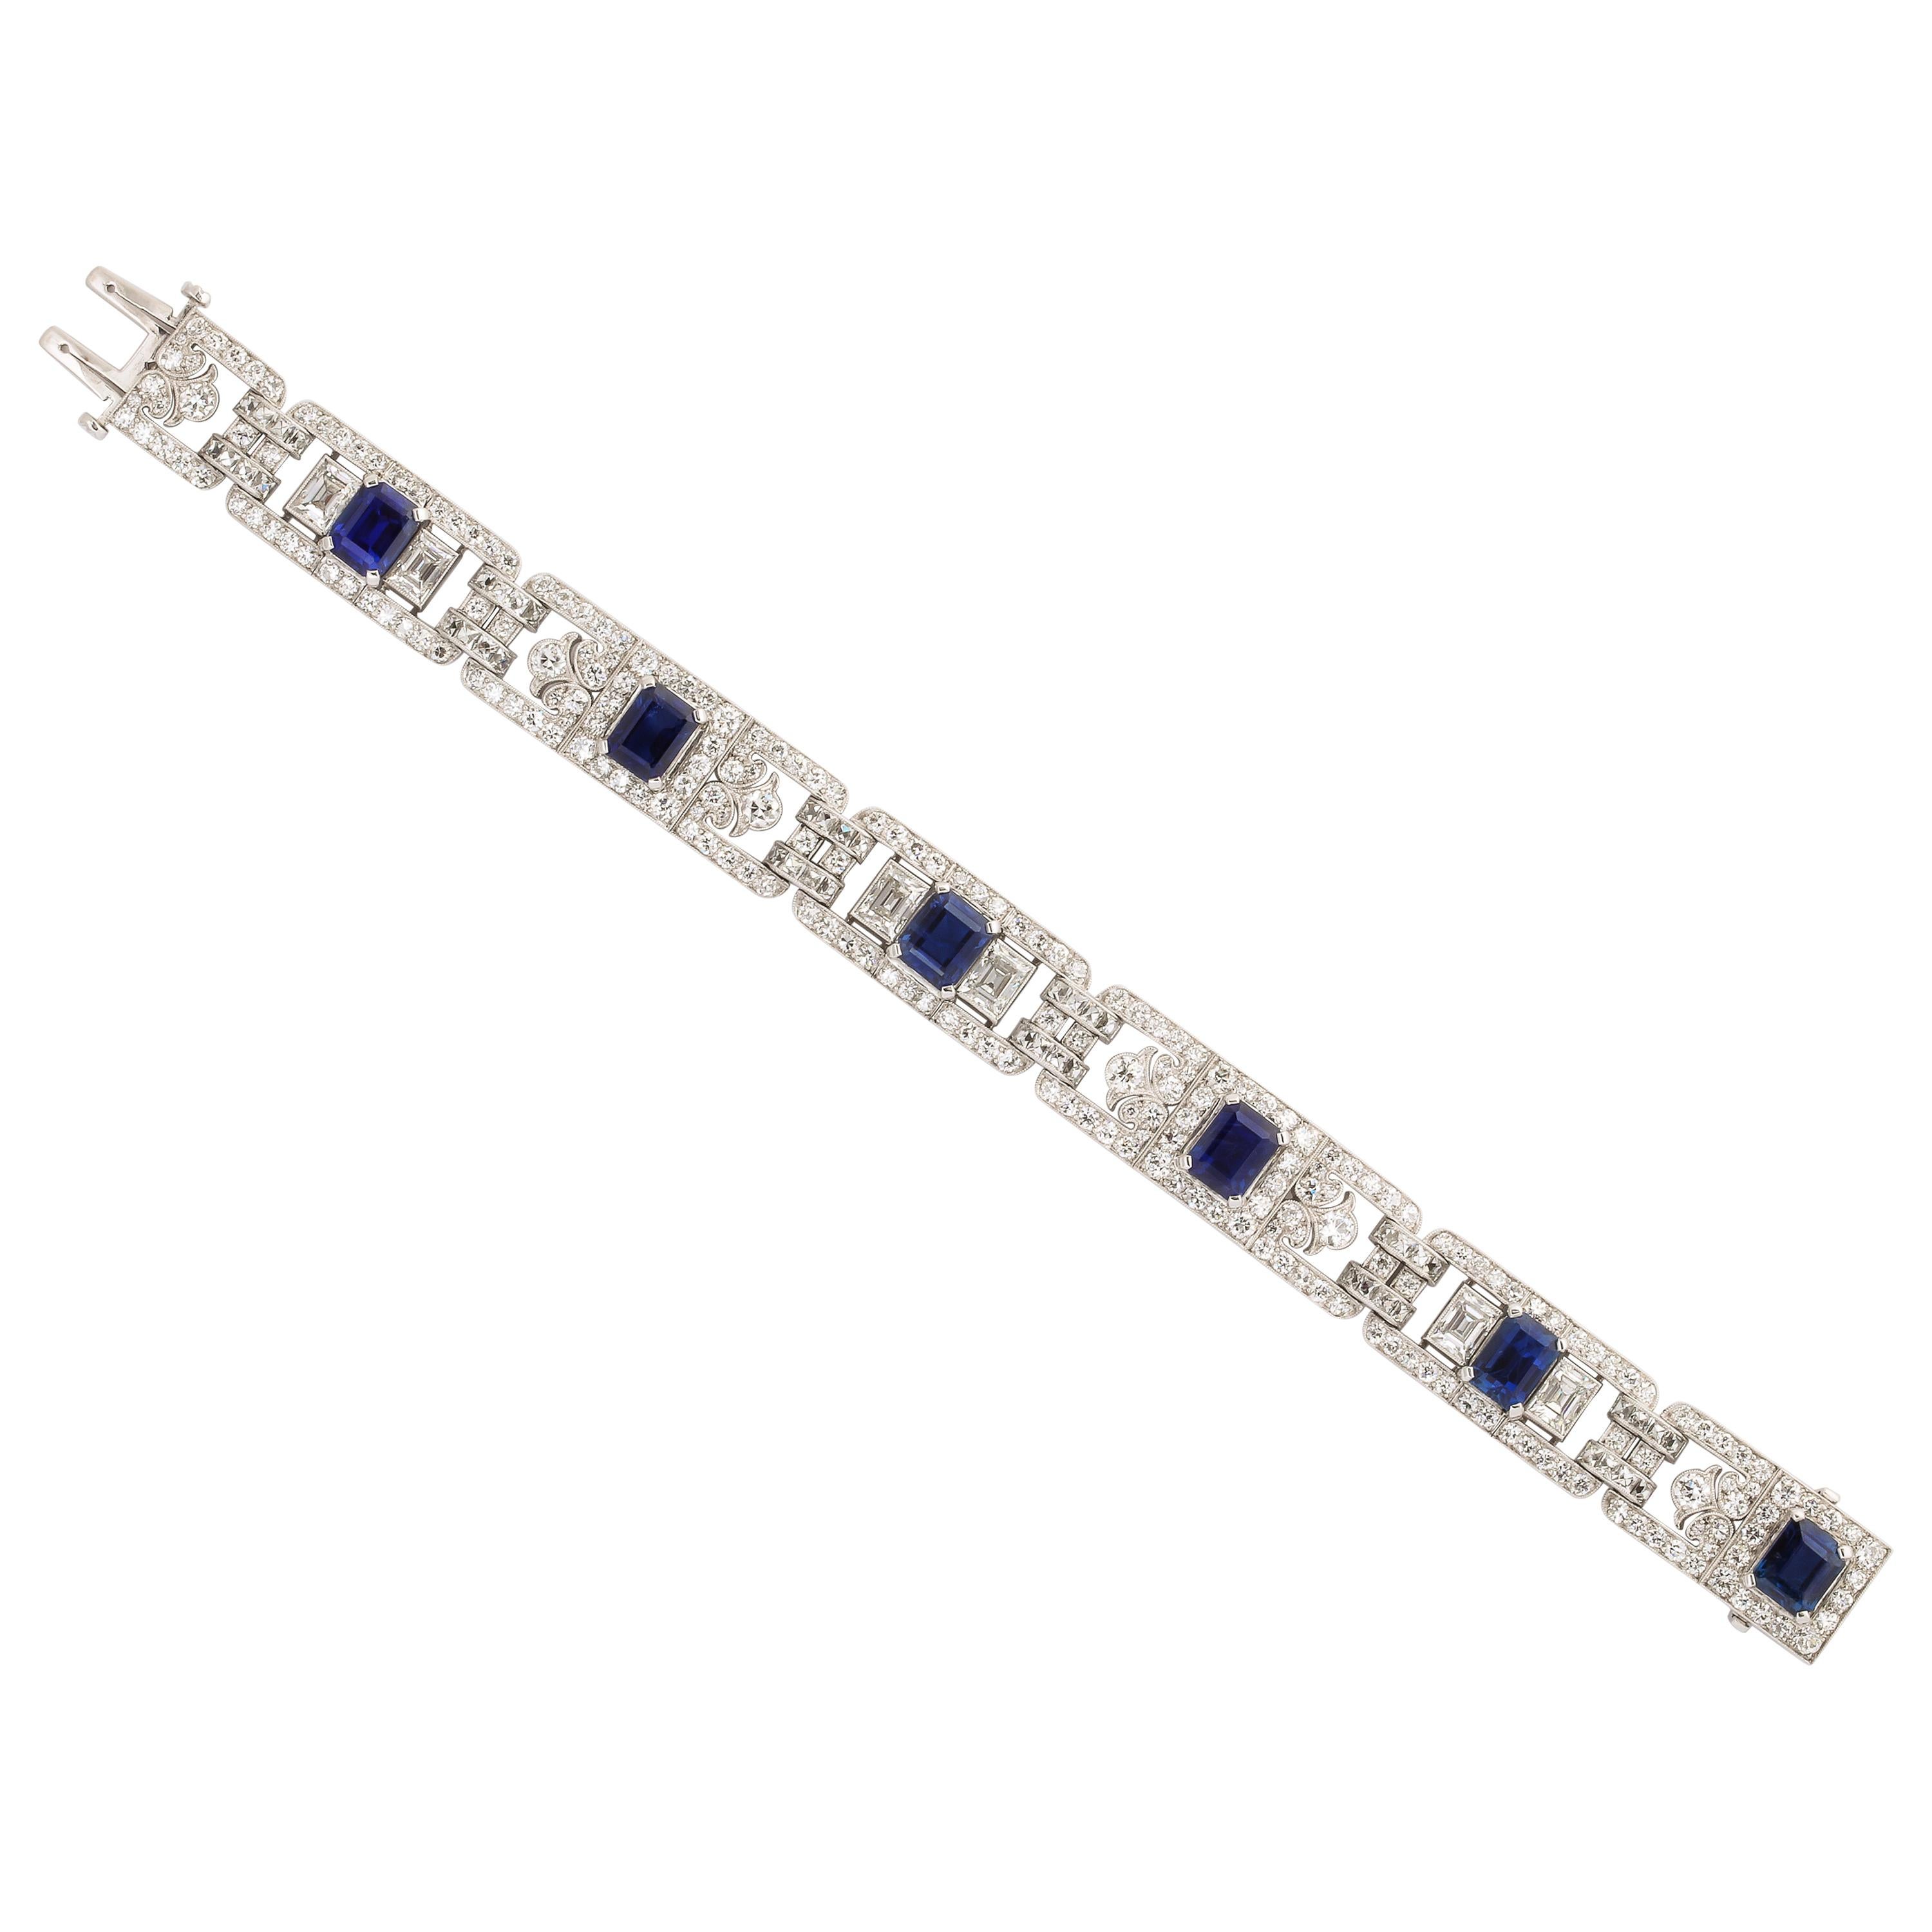 Art Deco Sapphire and Diamond Bracelet by Tiffany & Co.